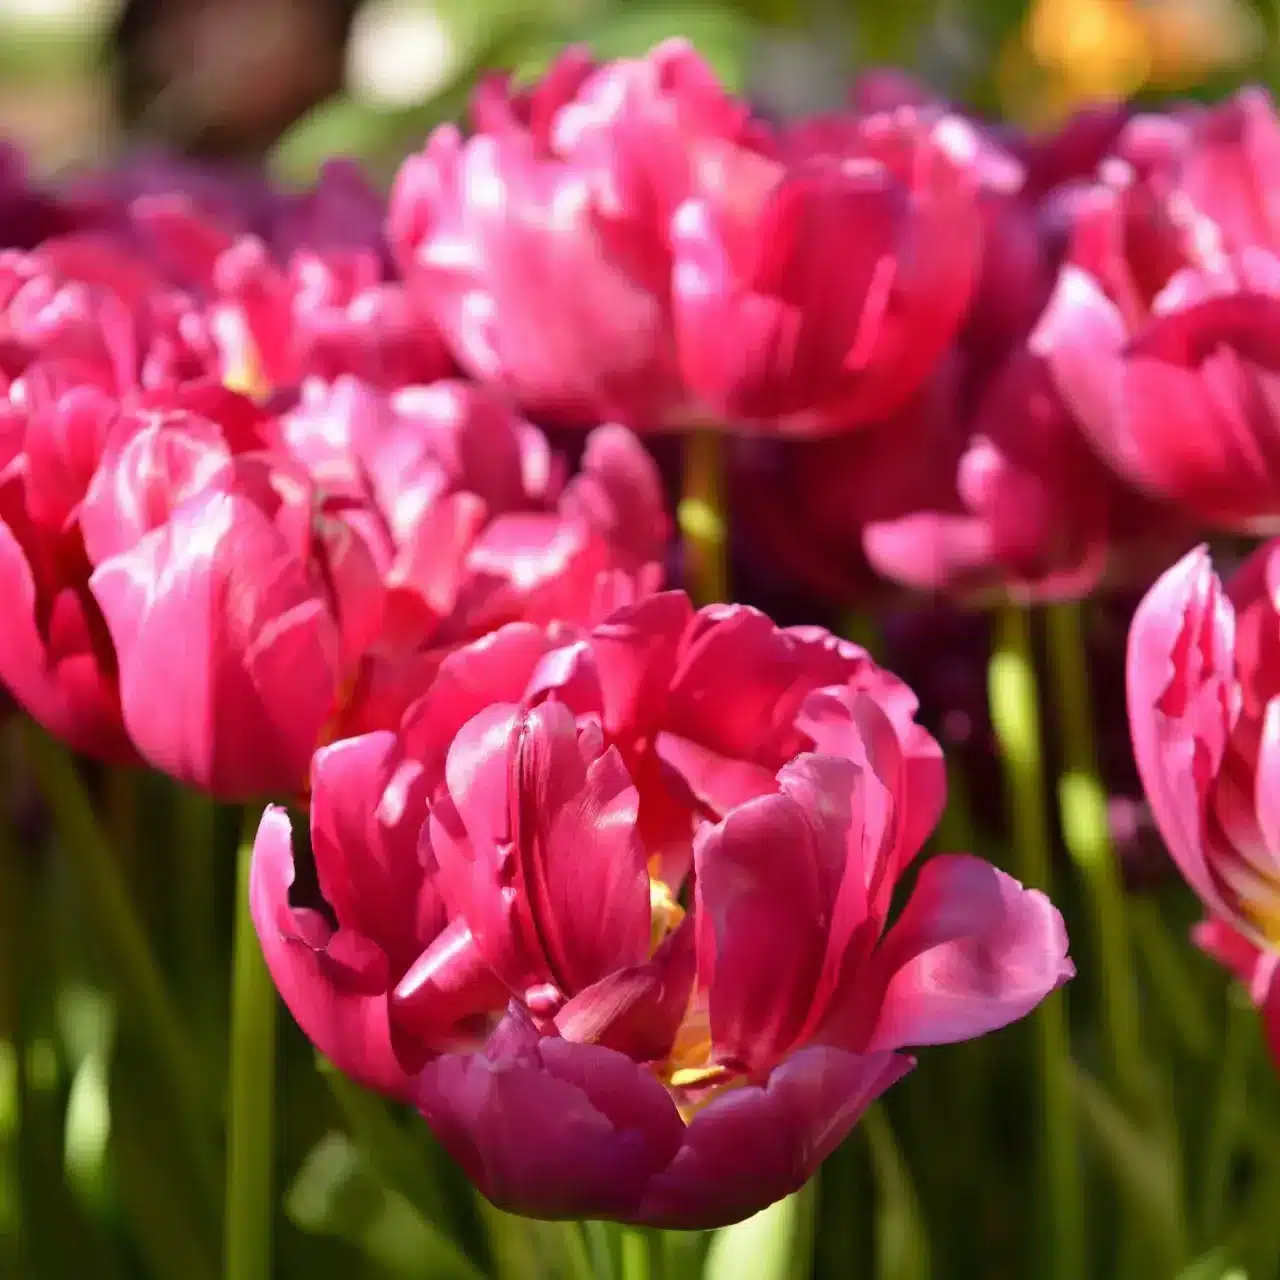 The number of tulip petals